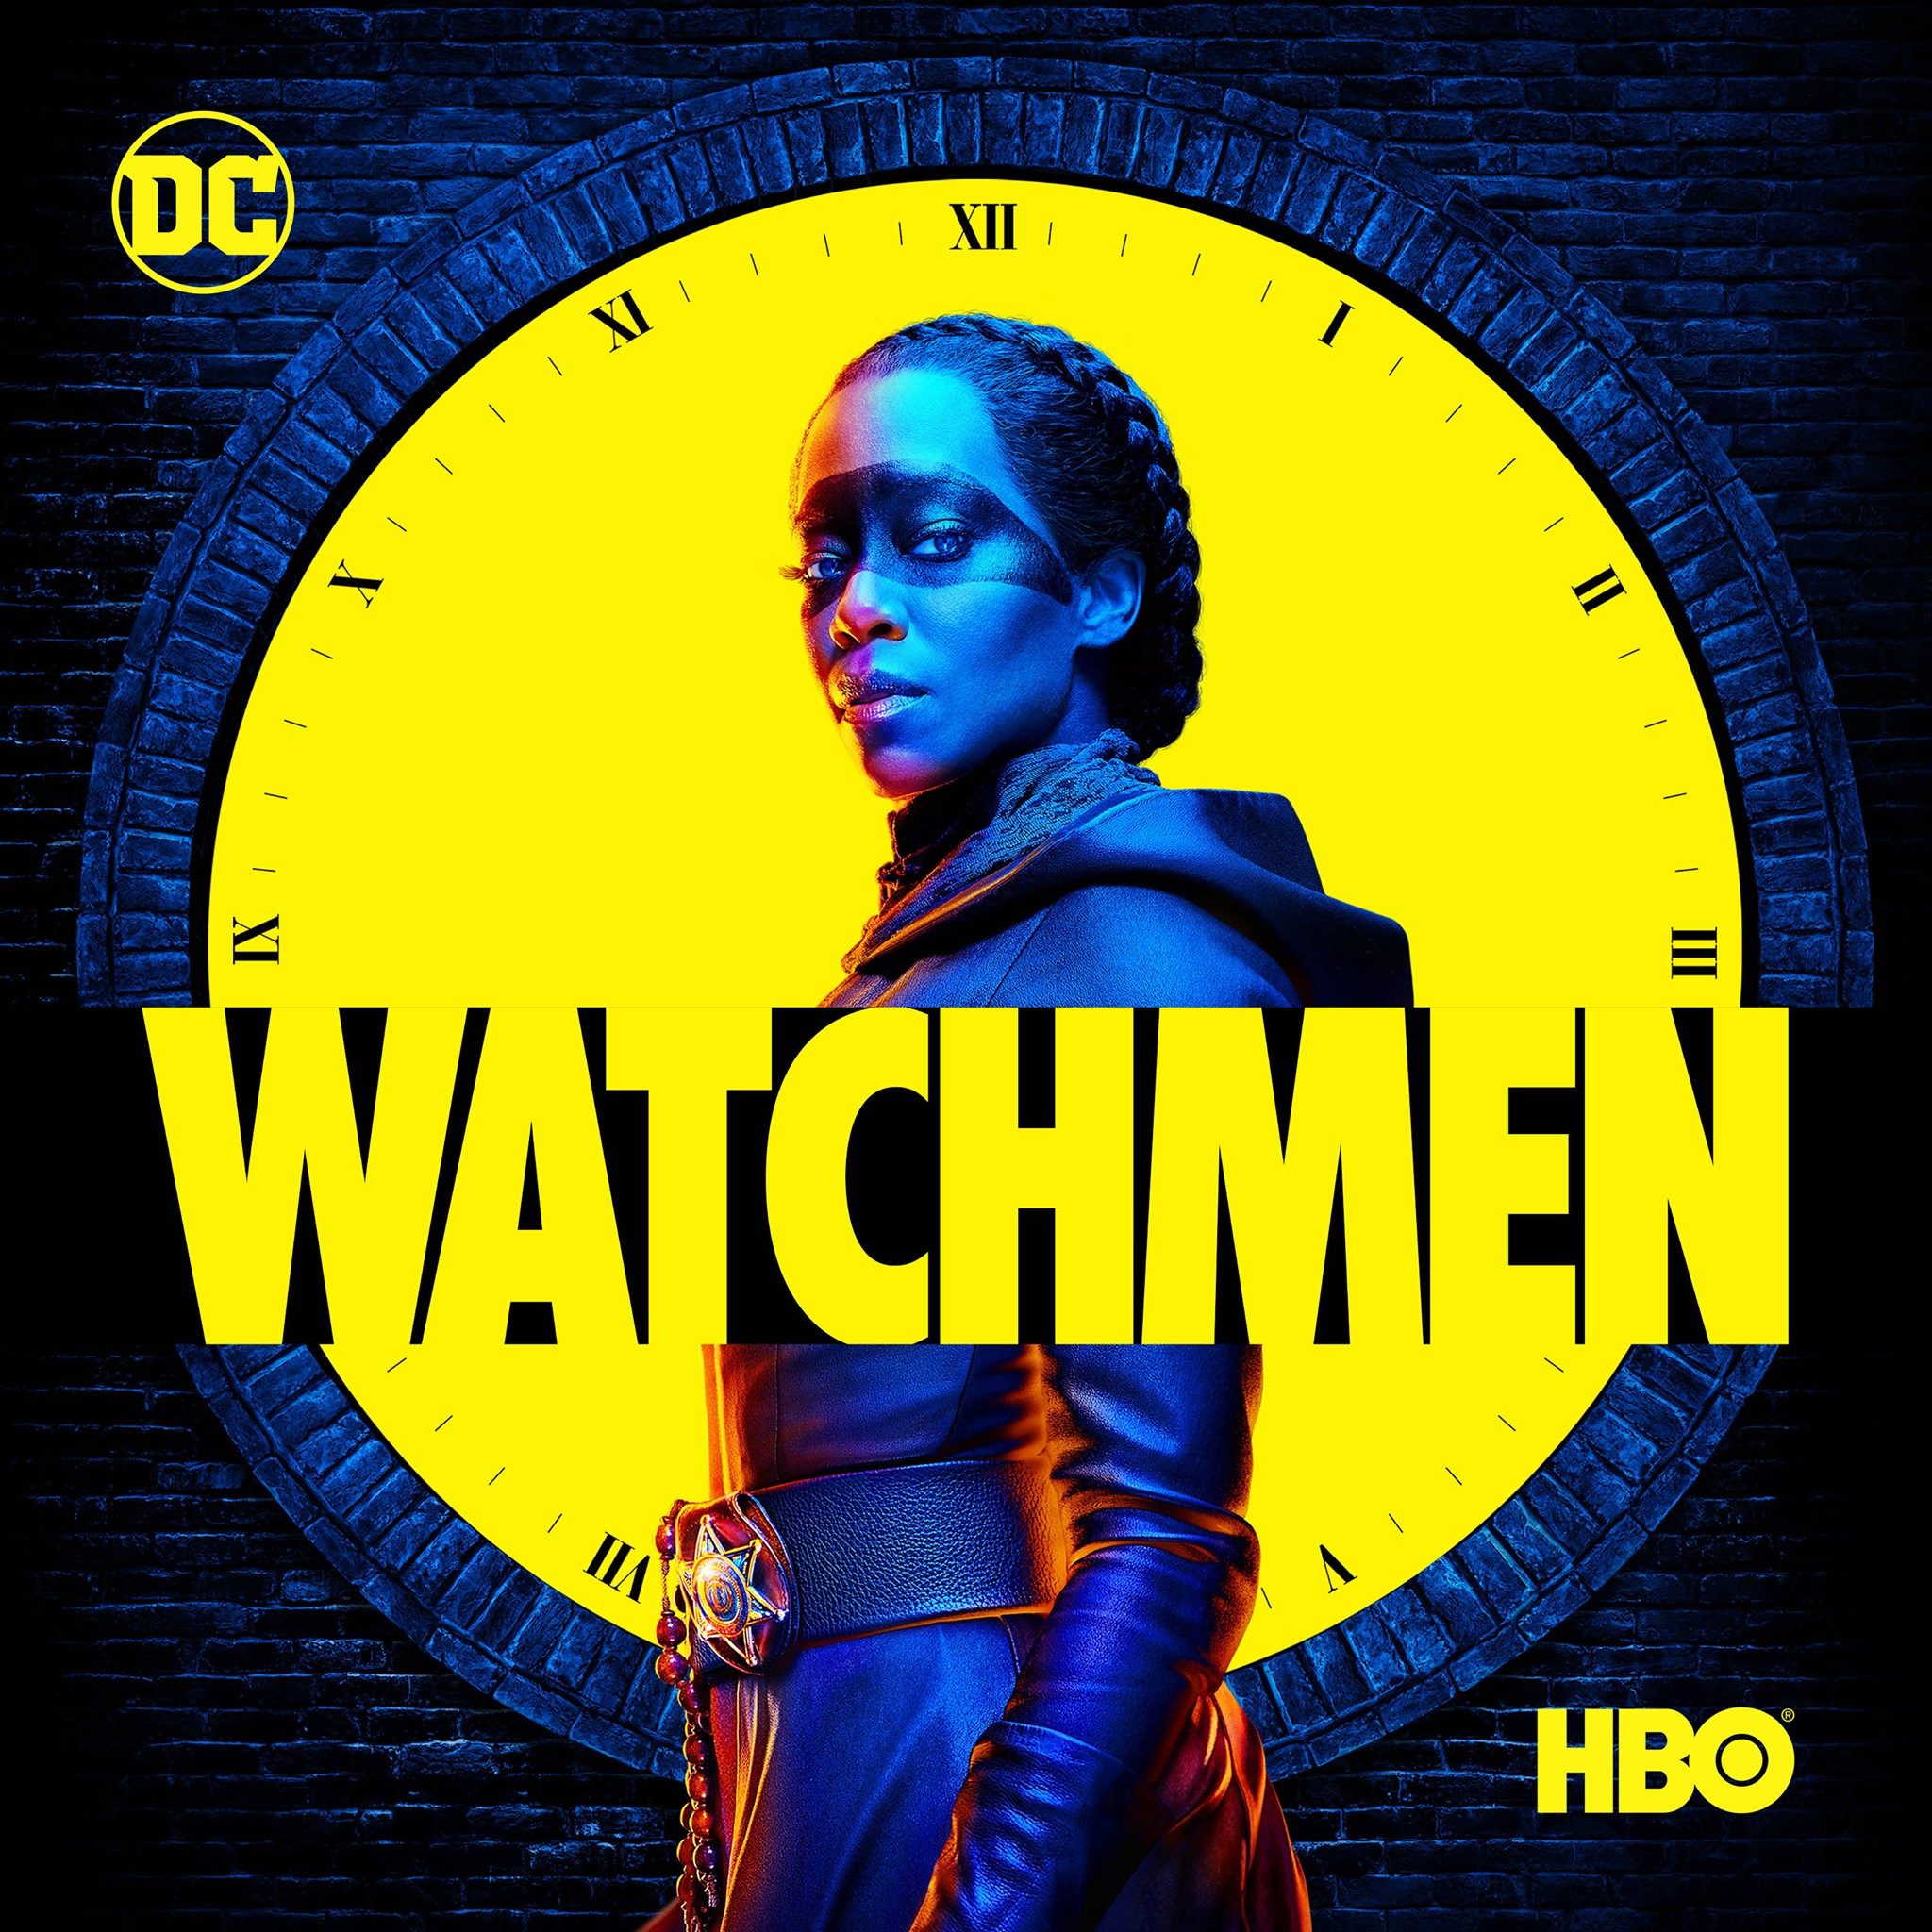 Race superhero series ‘Watchmen’ wins big at ‘remote’ Emmys